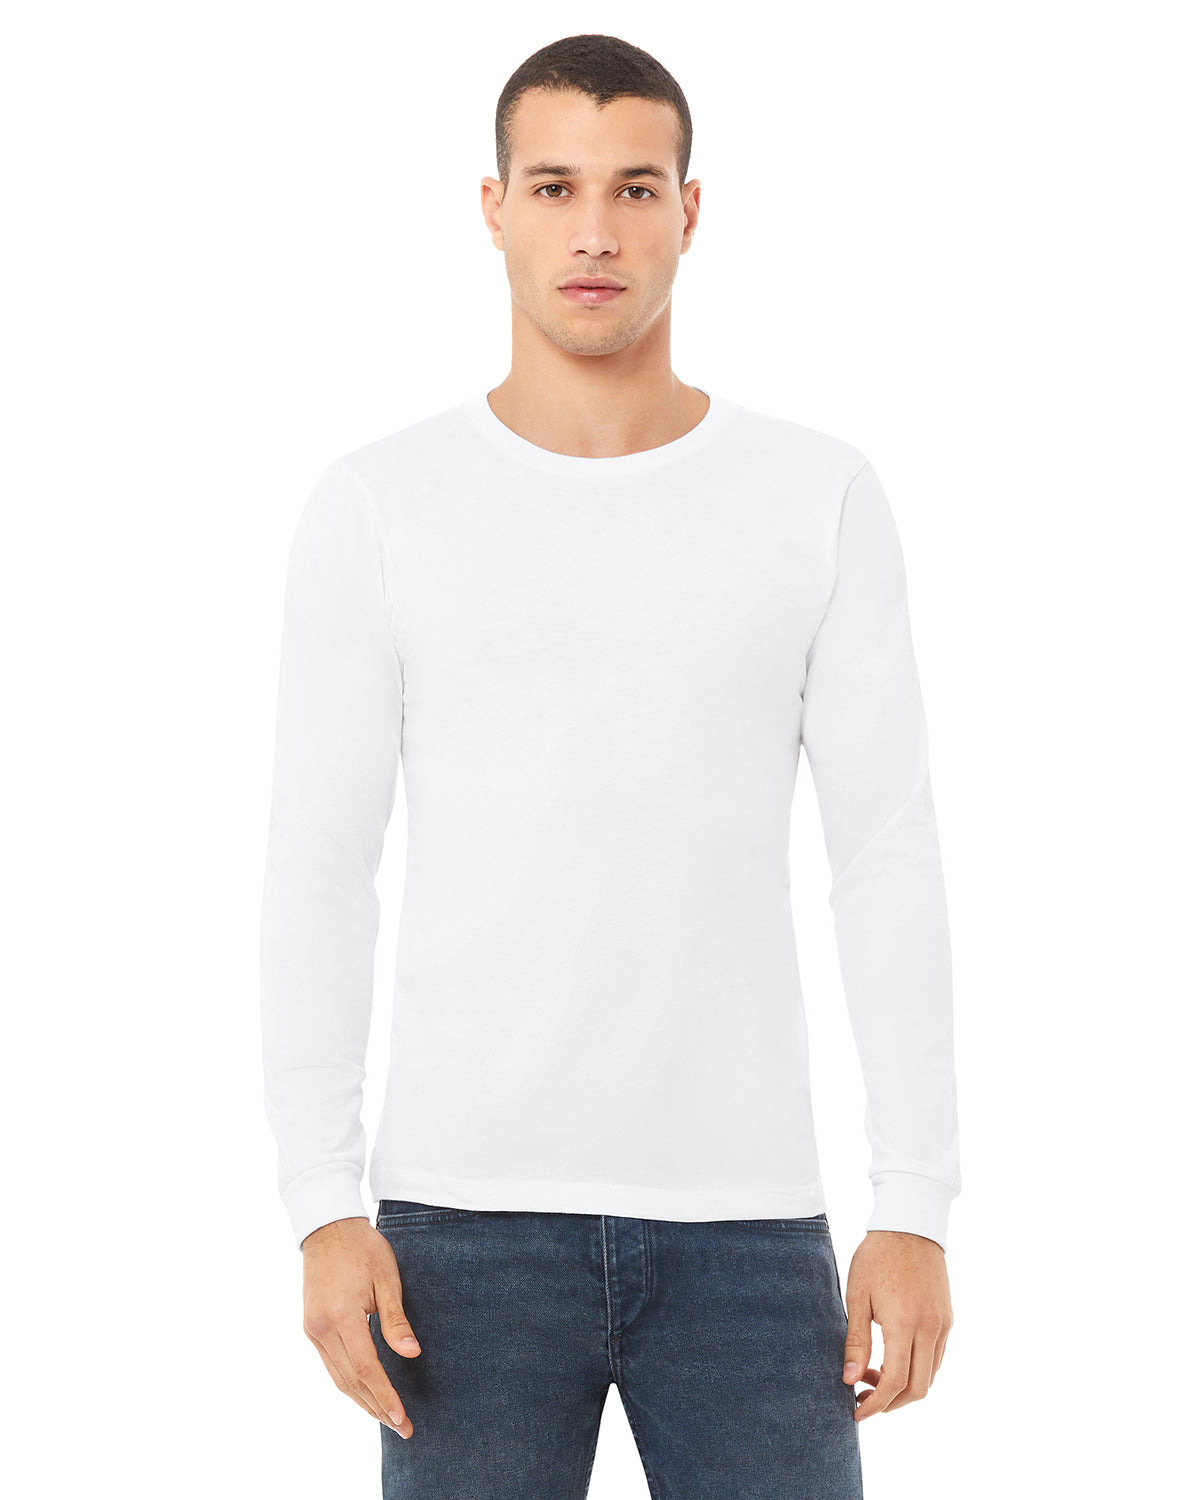 Custom Adult Unisex Long Sleeve Shirt